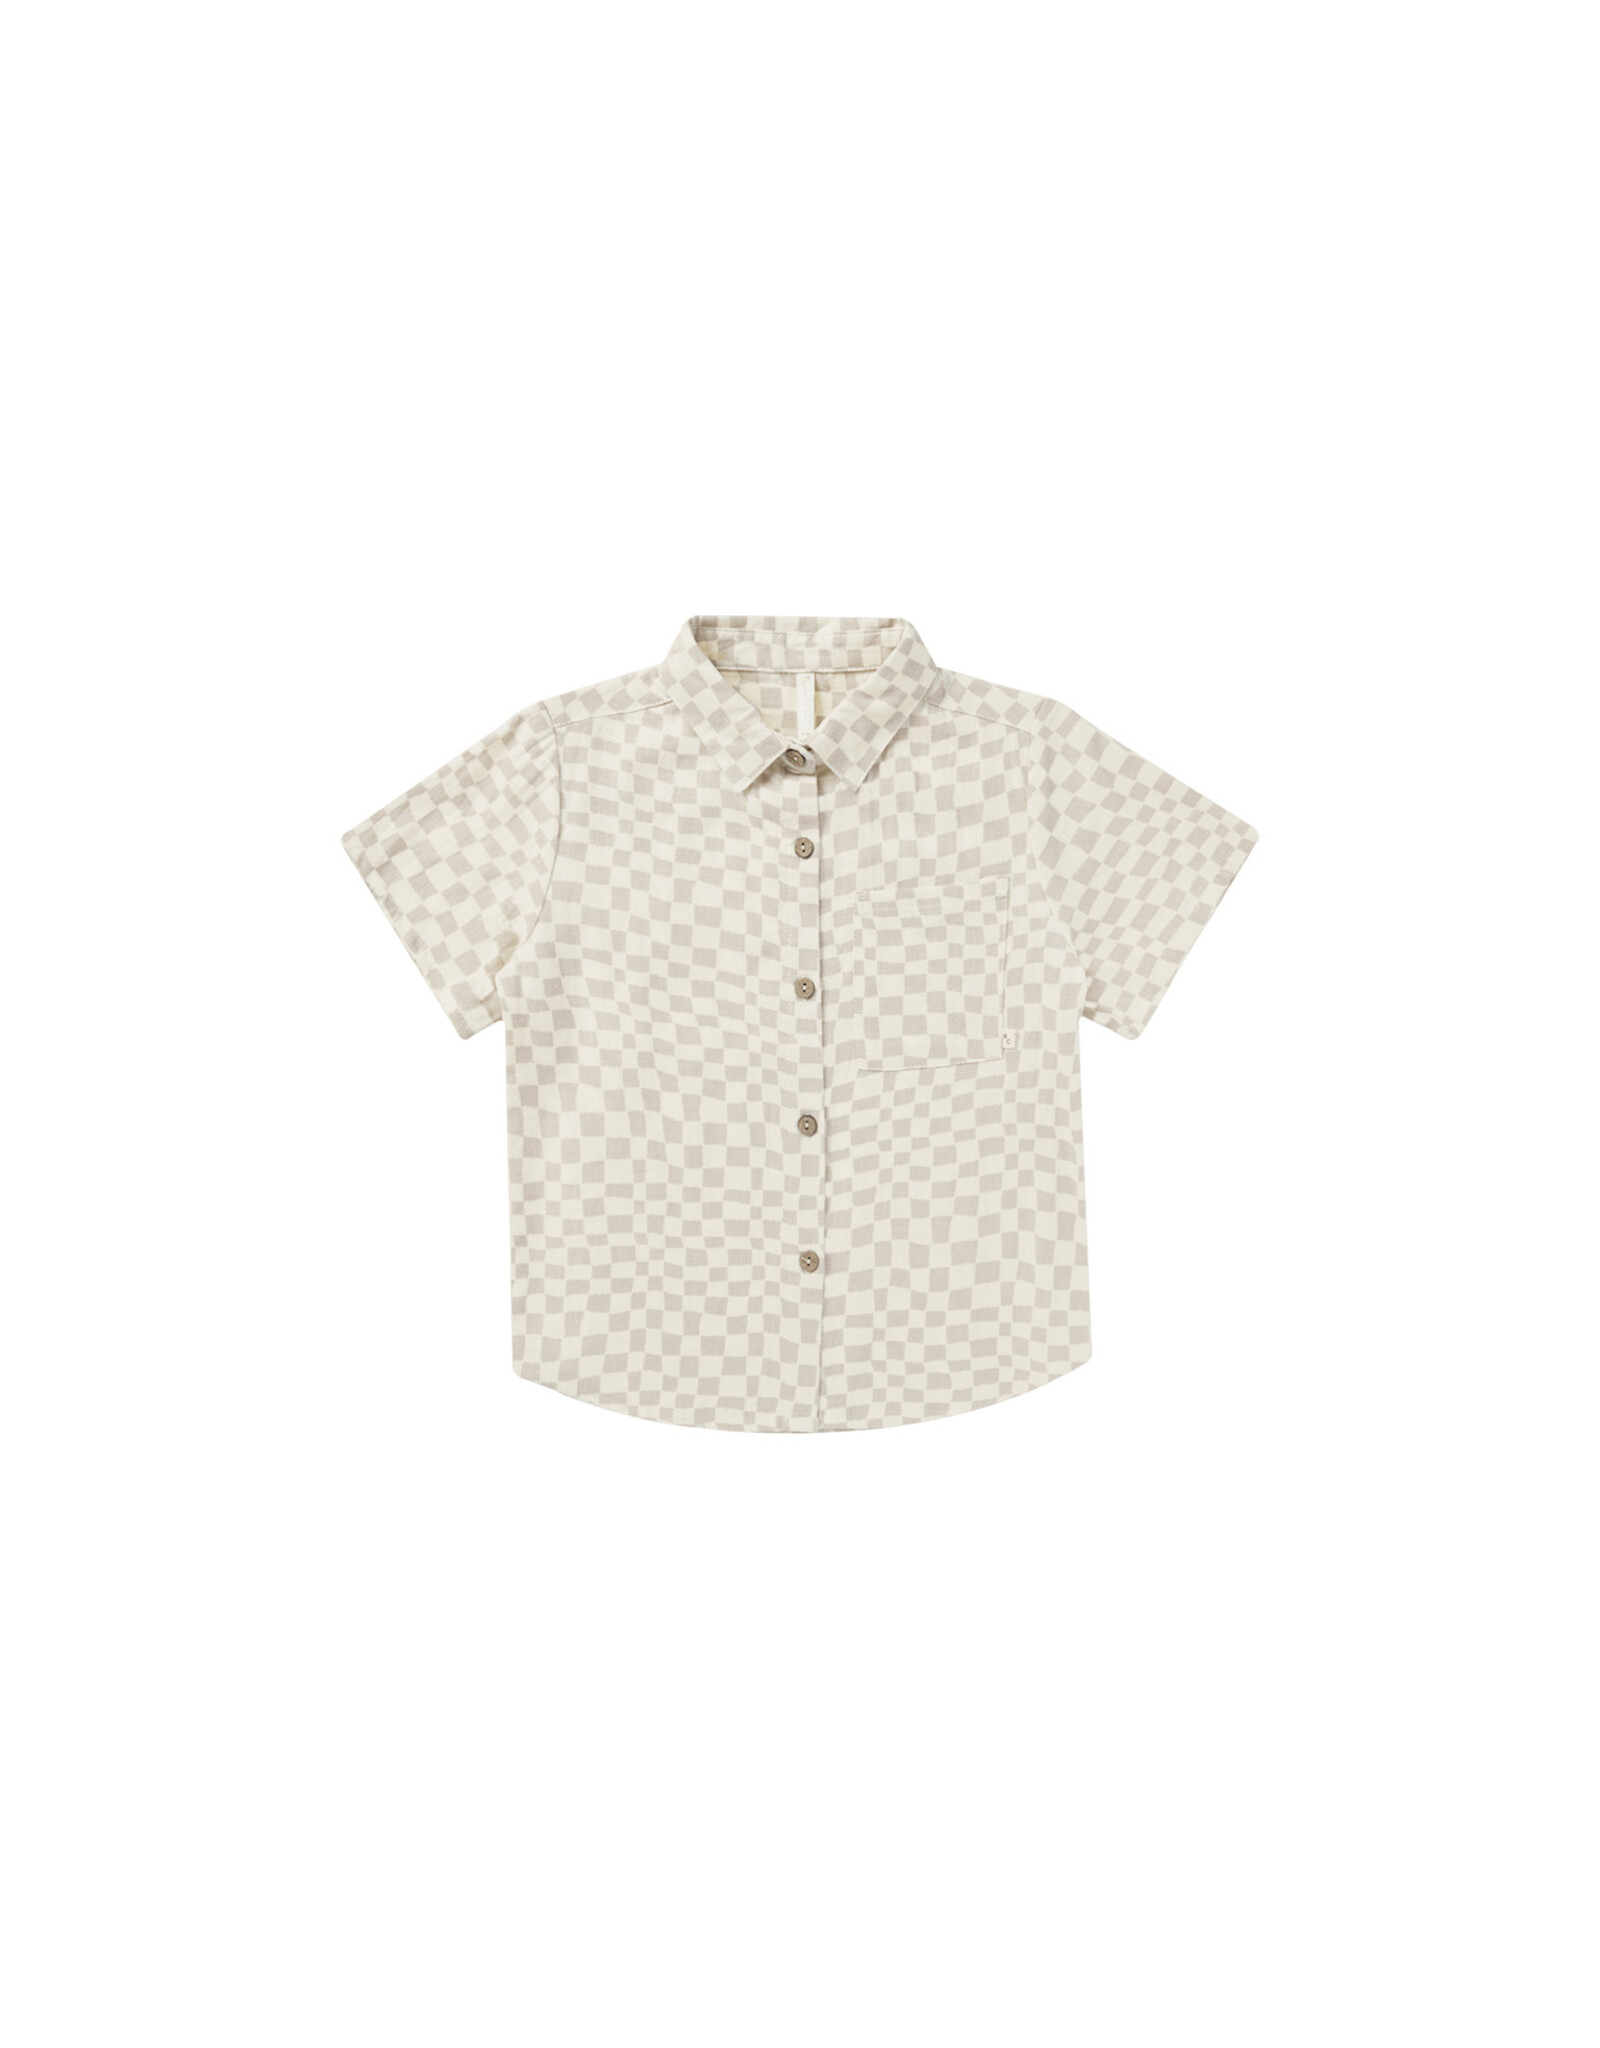 Rylee+Cru 4-5YO: Collared Short Sleeve Shirt - Dove Check